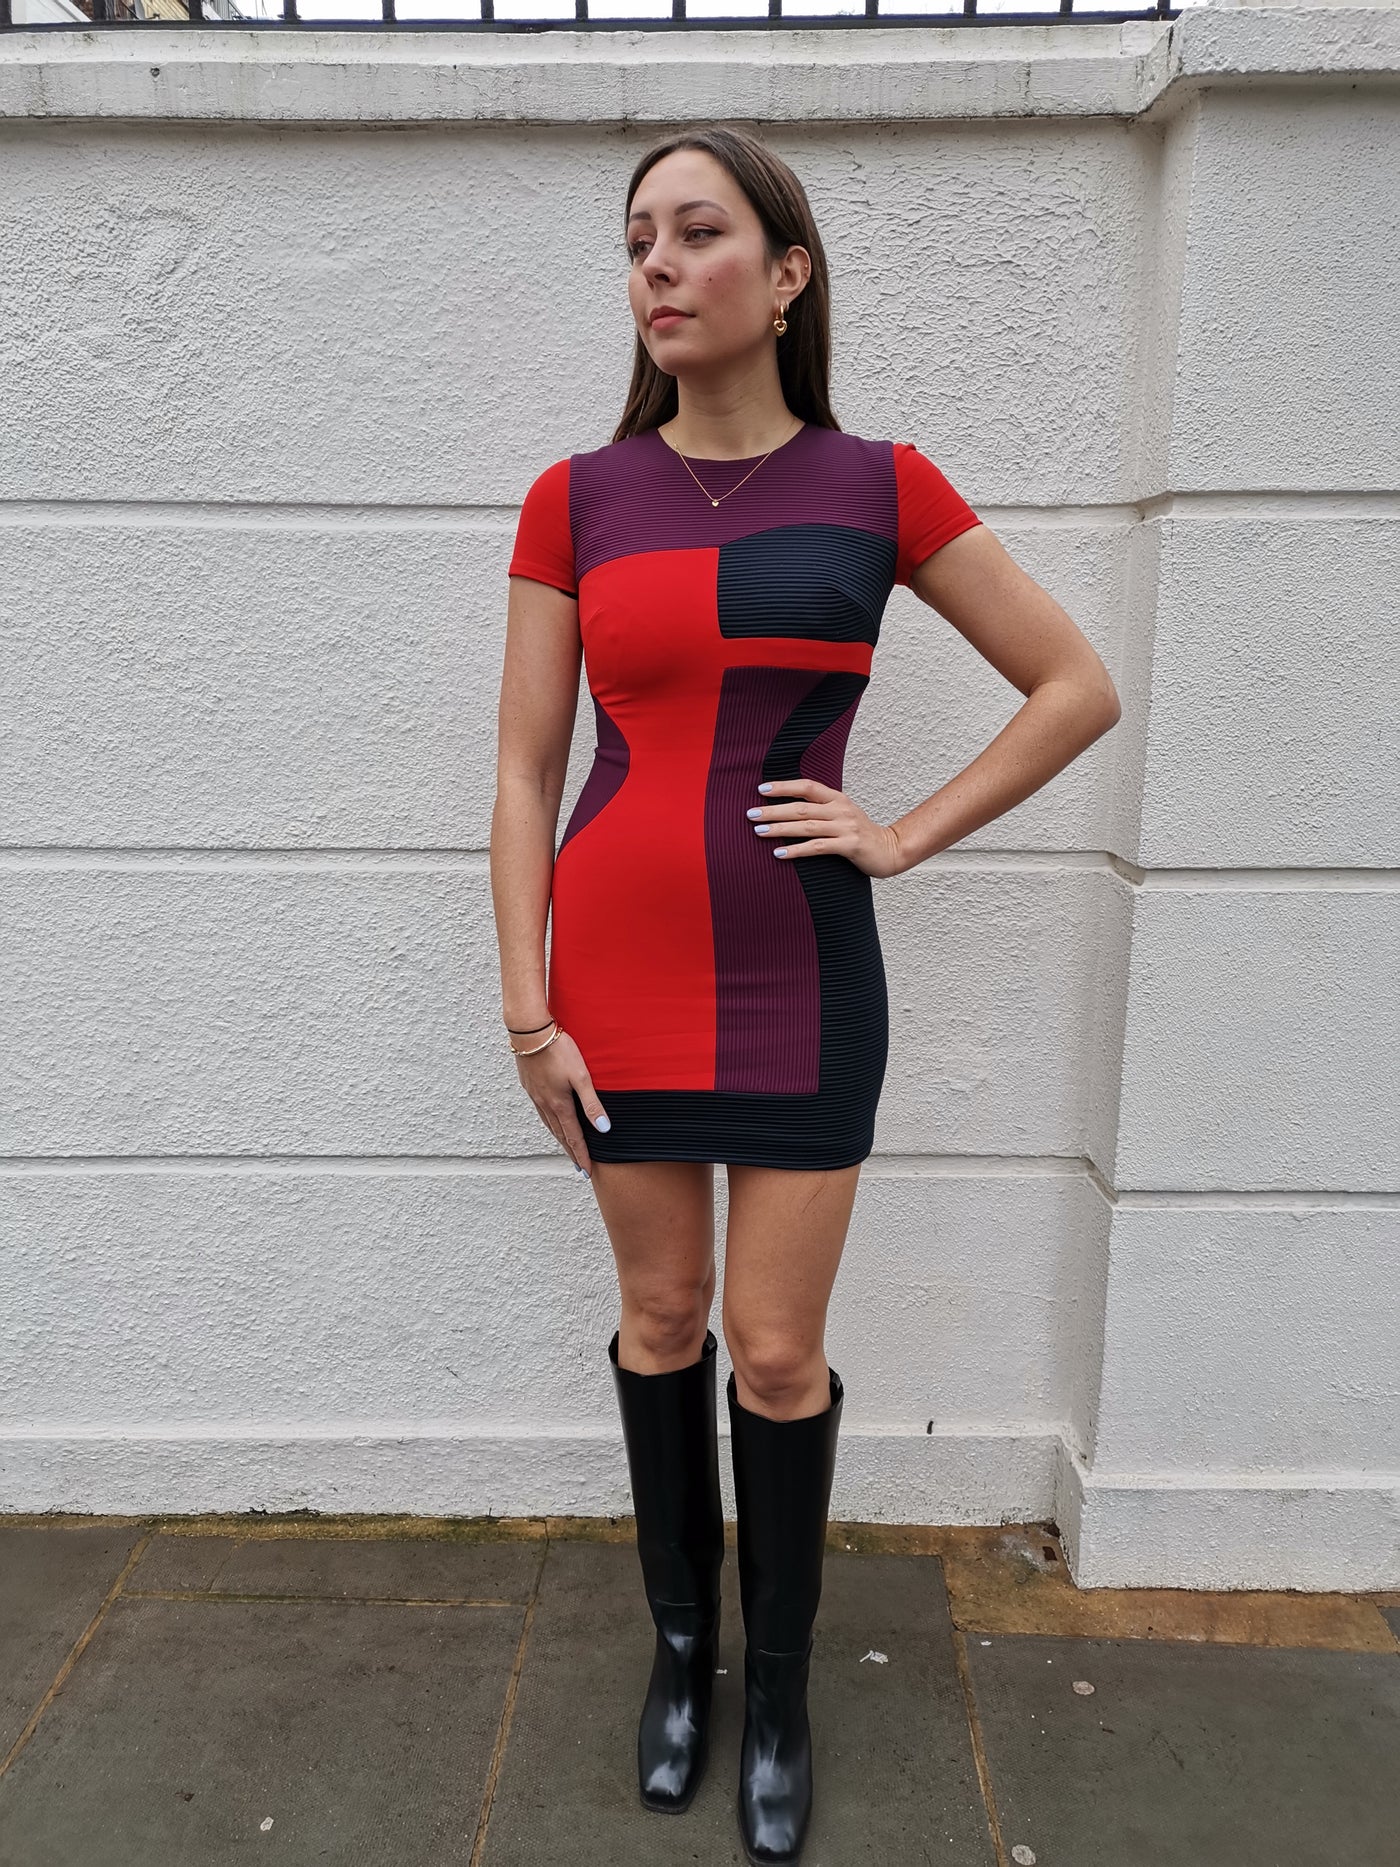 VERSACE red colour block dress size 36